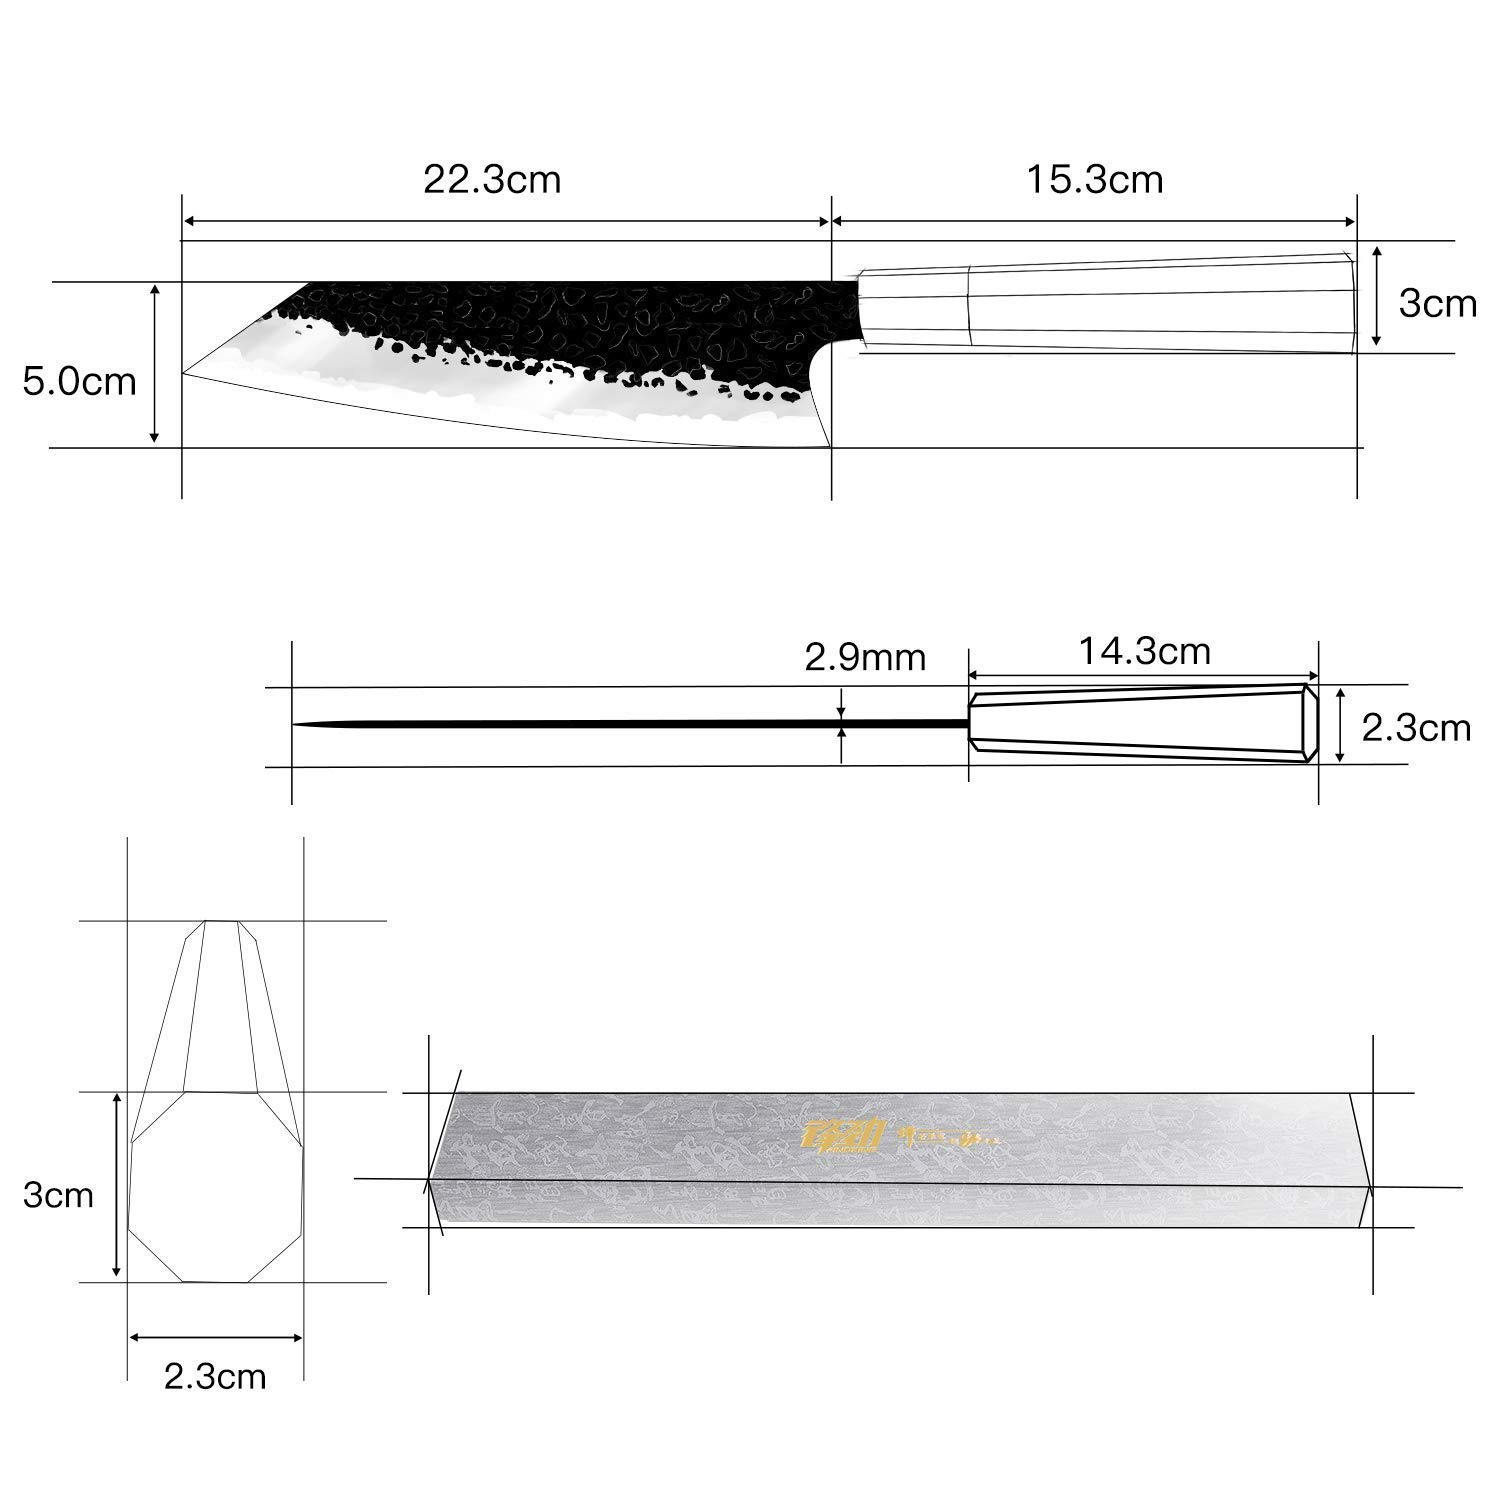 FINDKING 6pcs kitchen knife set Dynasty series-3 layer 9CR18MOV clad steel w/octagon handle knife set